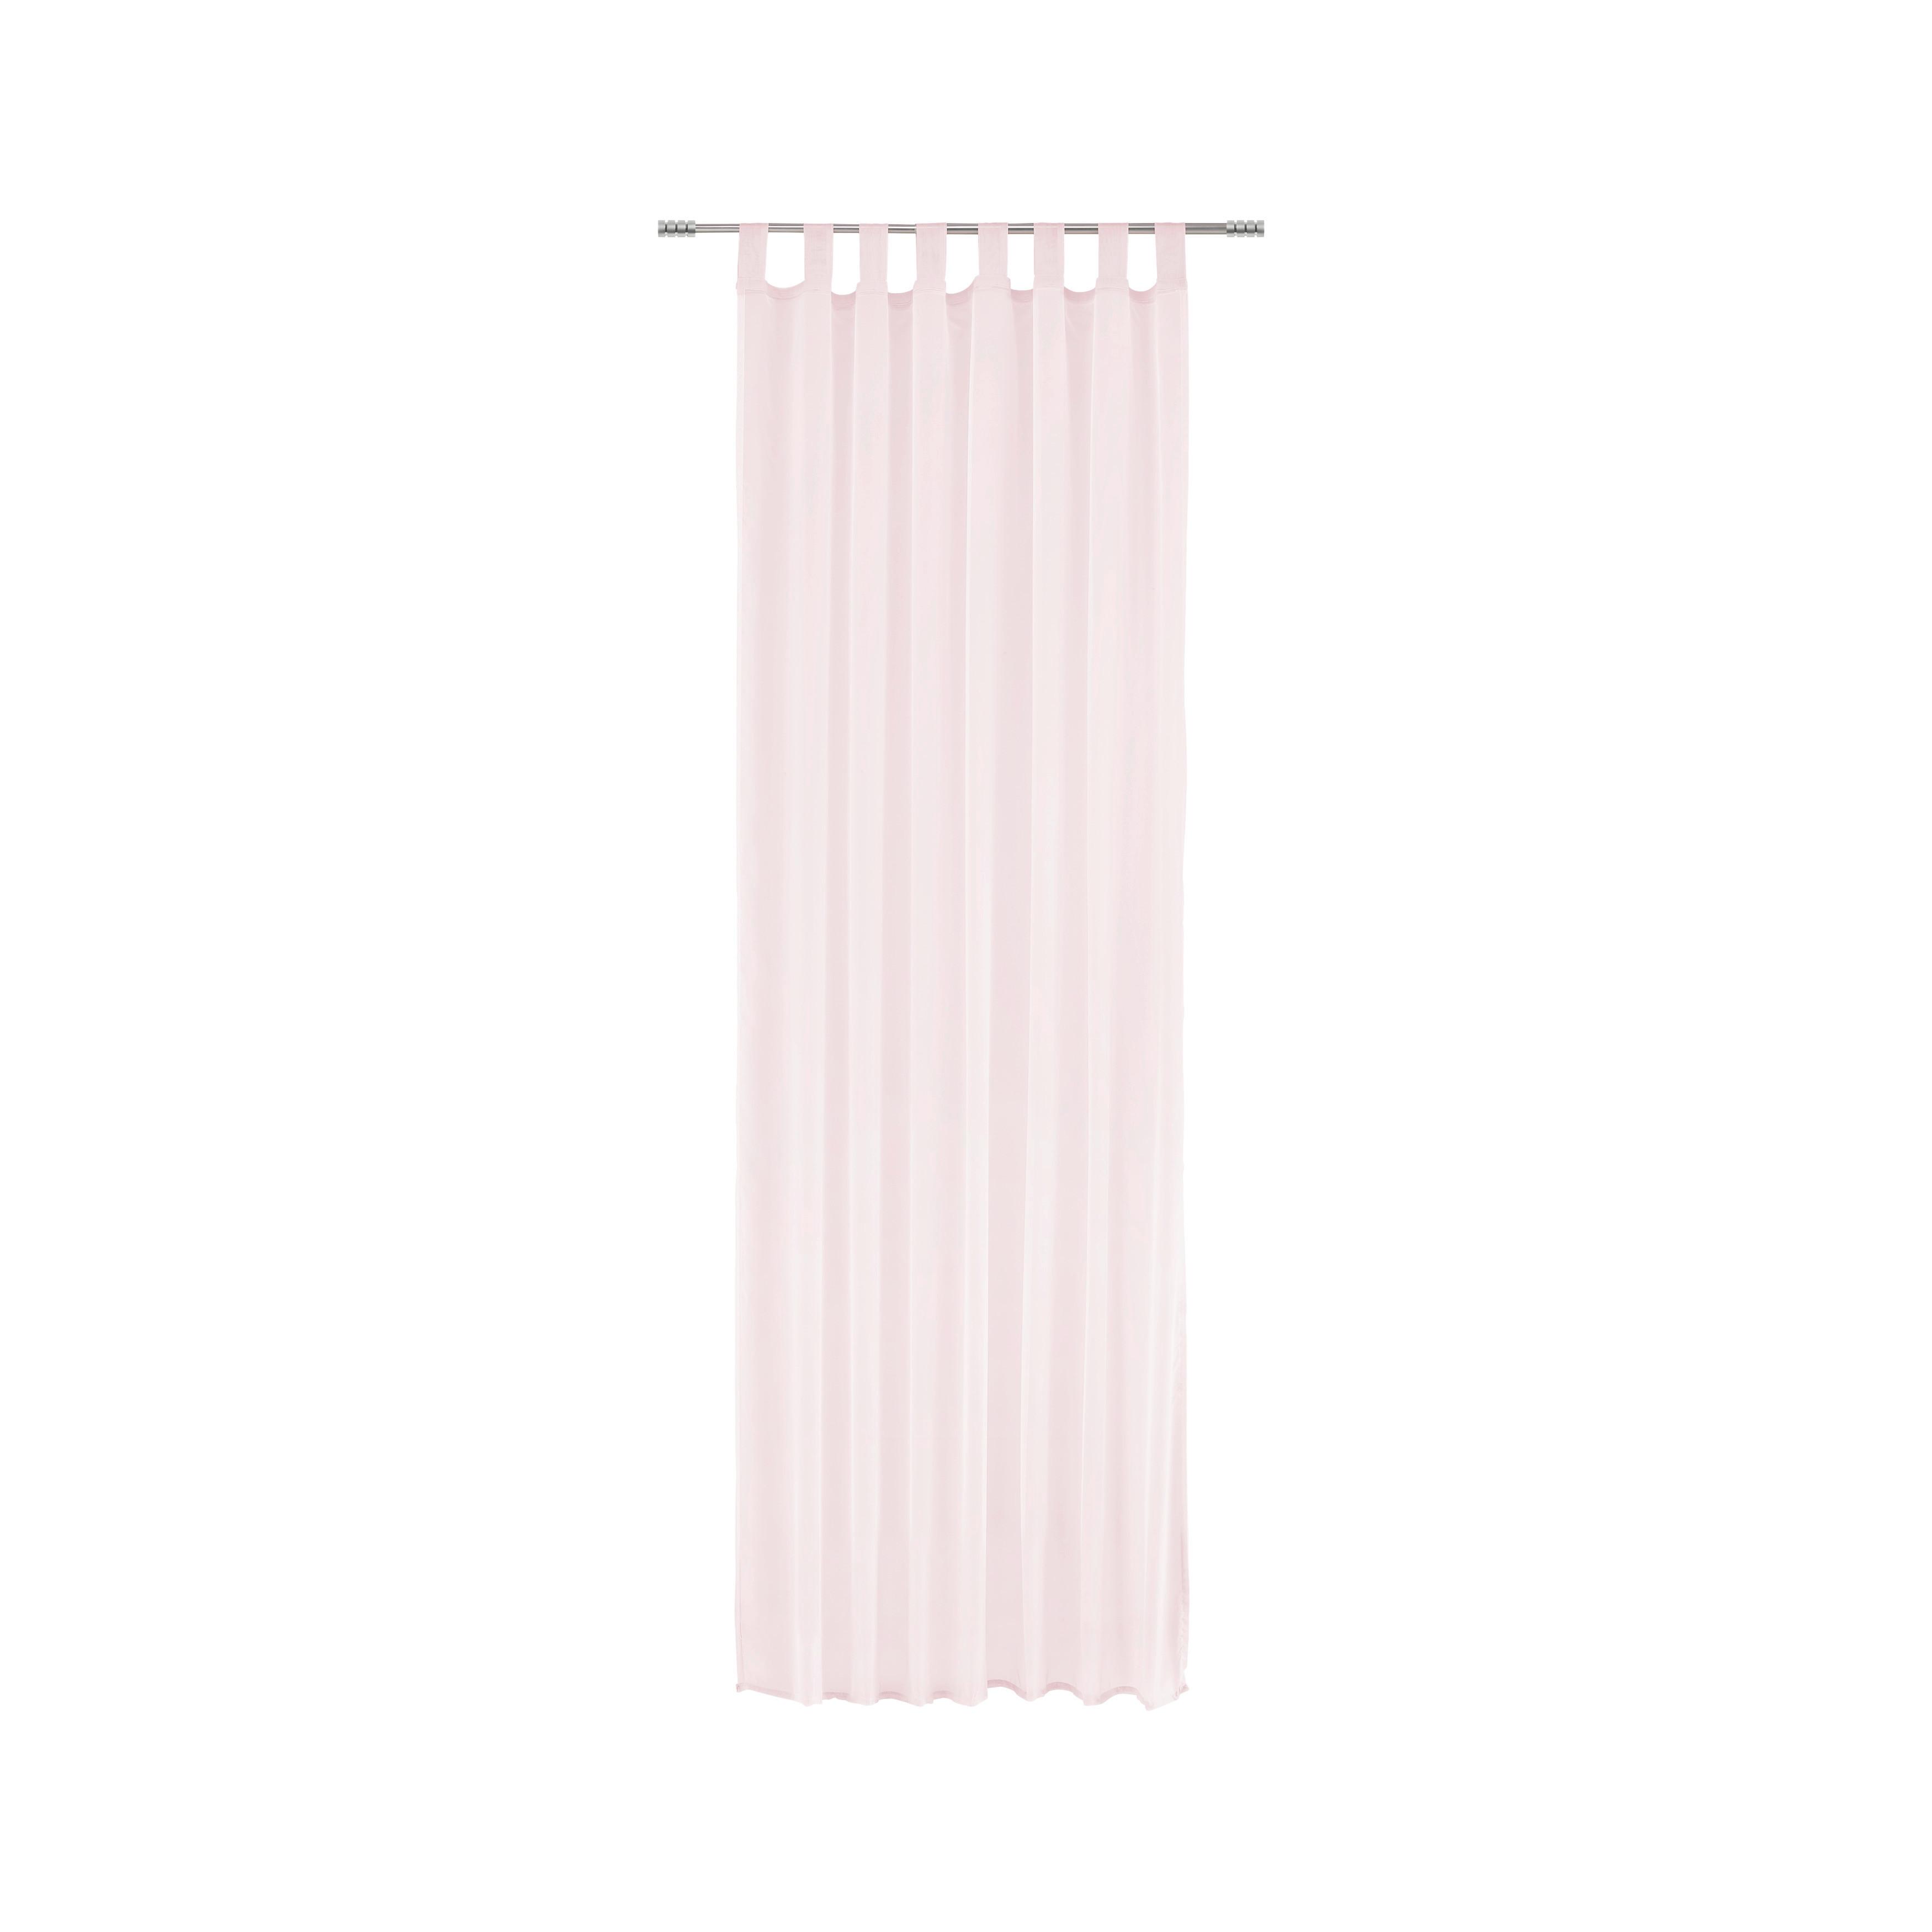 Füles Függöny Hanna 2db/csomag, 140/245cm - Rózsaszín, Textil (140/245cm) - Based